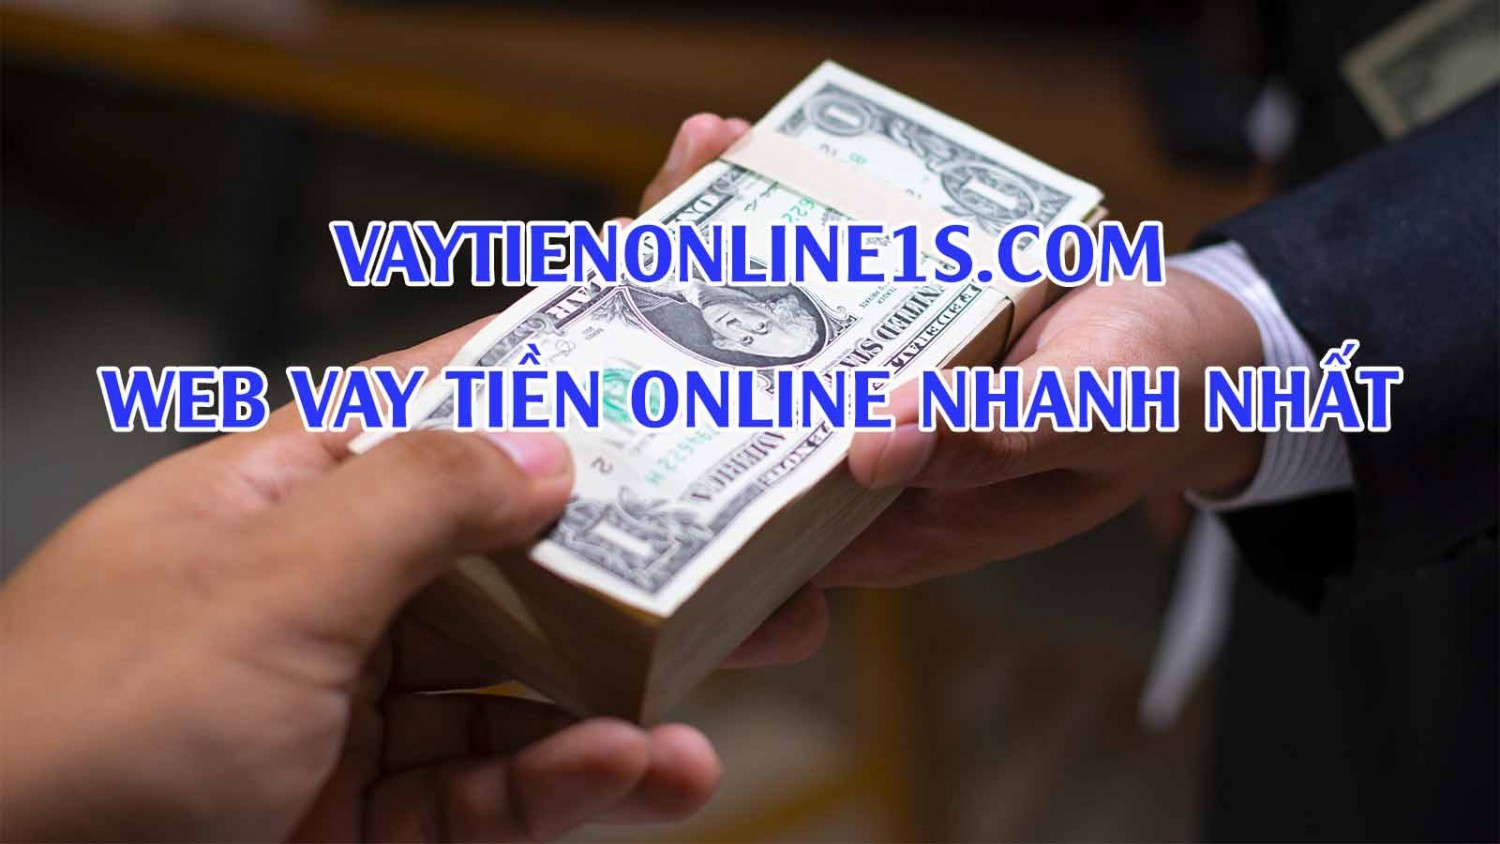 VaytienOnline1s.com Web vay tiền Online nhanh nhất